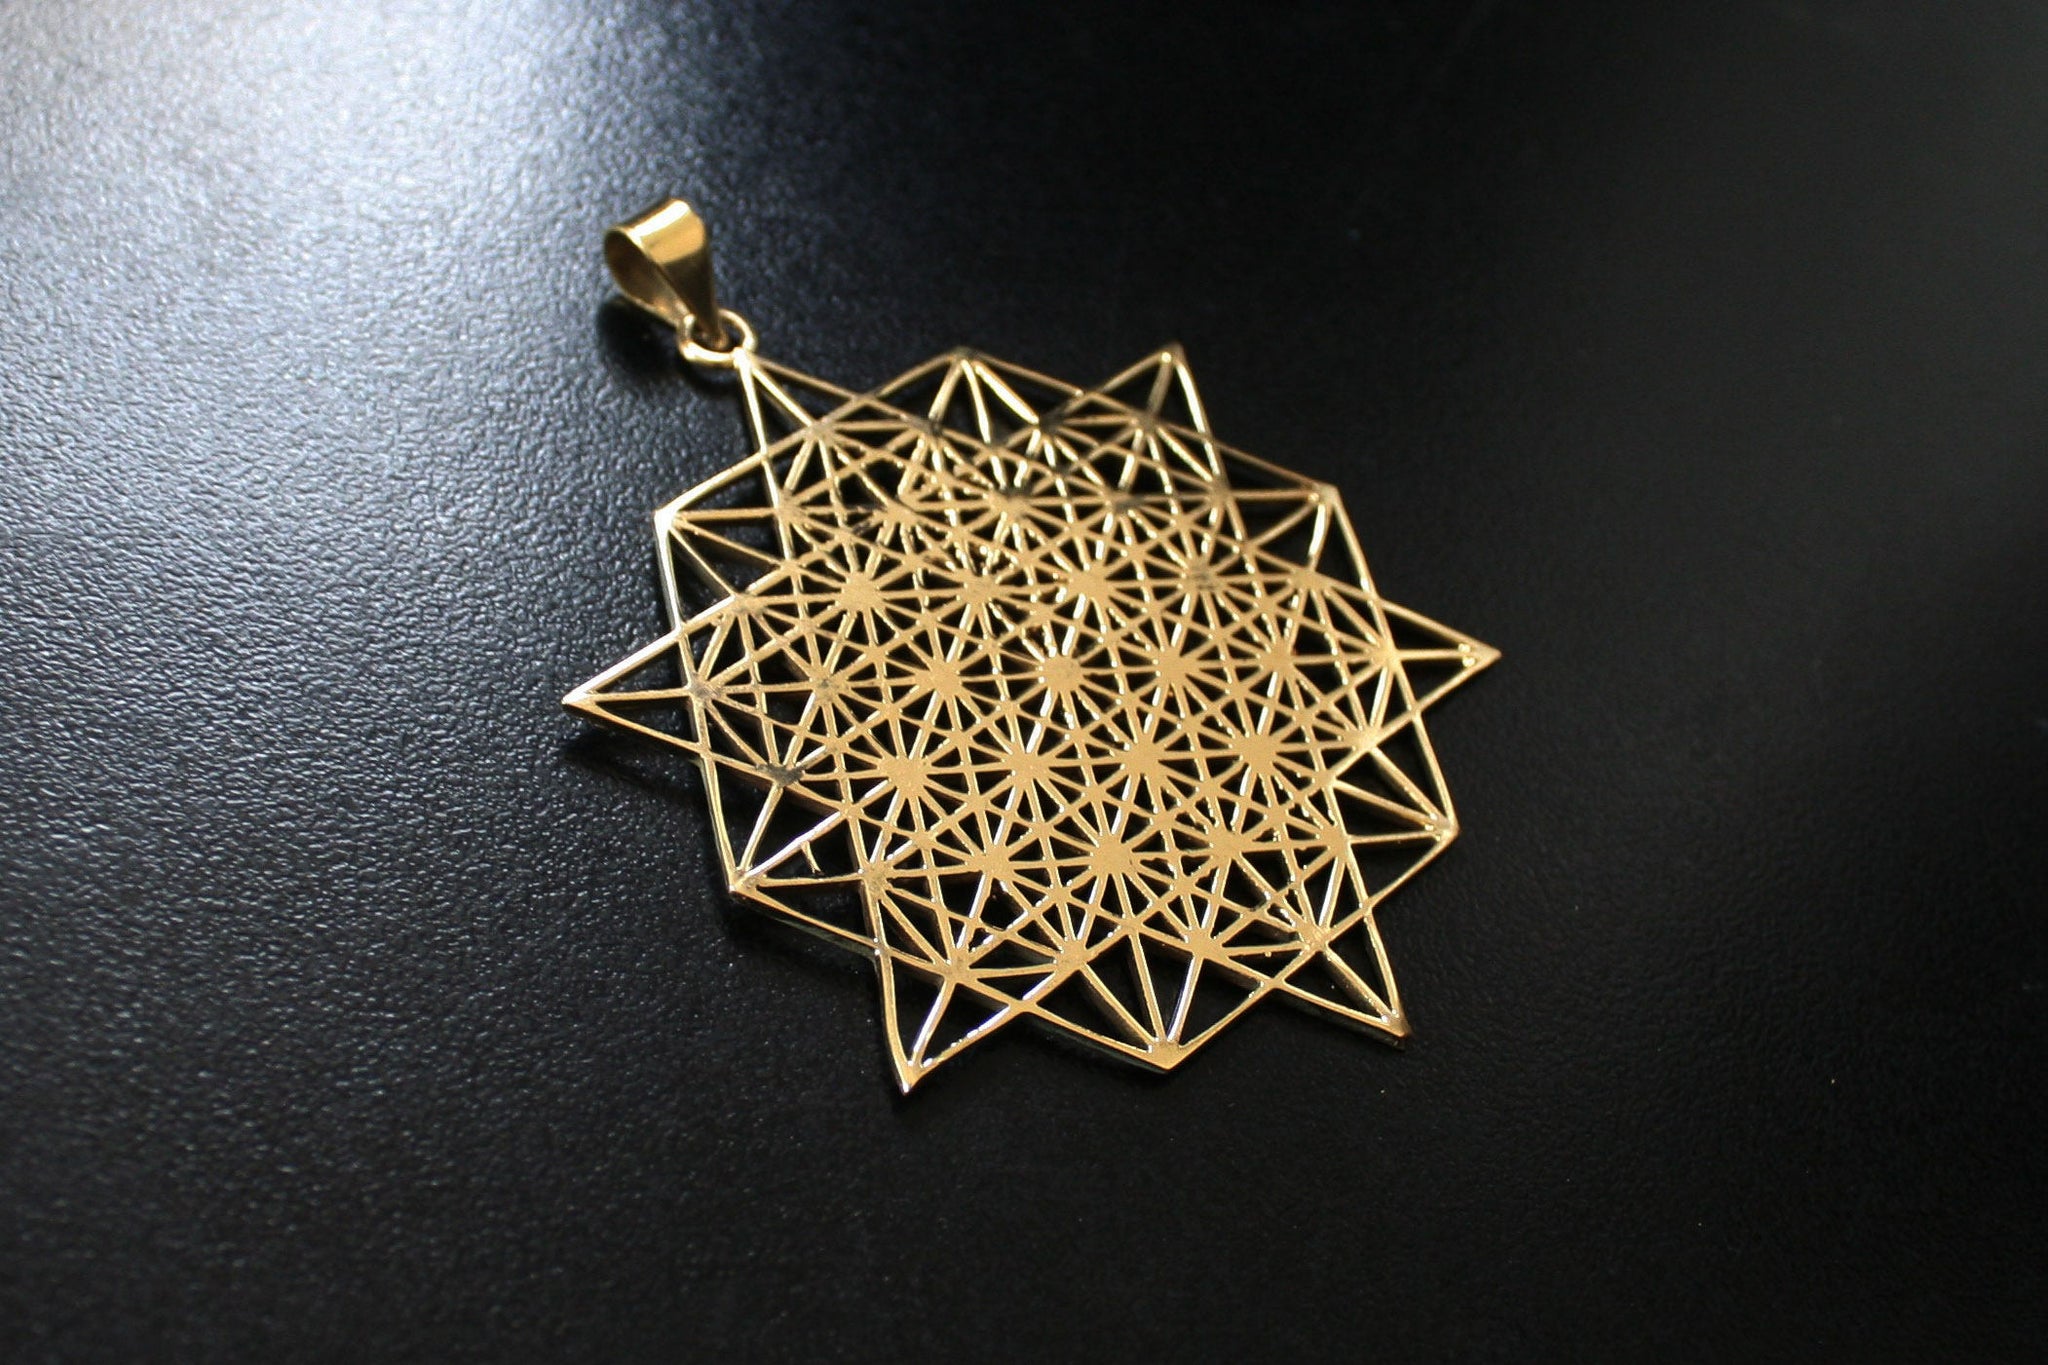 TETRAHEDRON STAR Brass Necklace - Flower of Life Necklace, Mandala Necklace, Sacred Geometry Necklace, Boho Necklace, Geometric Pendant